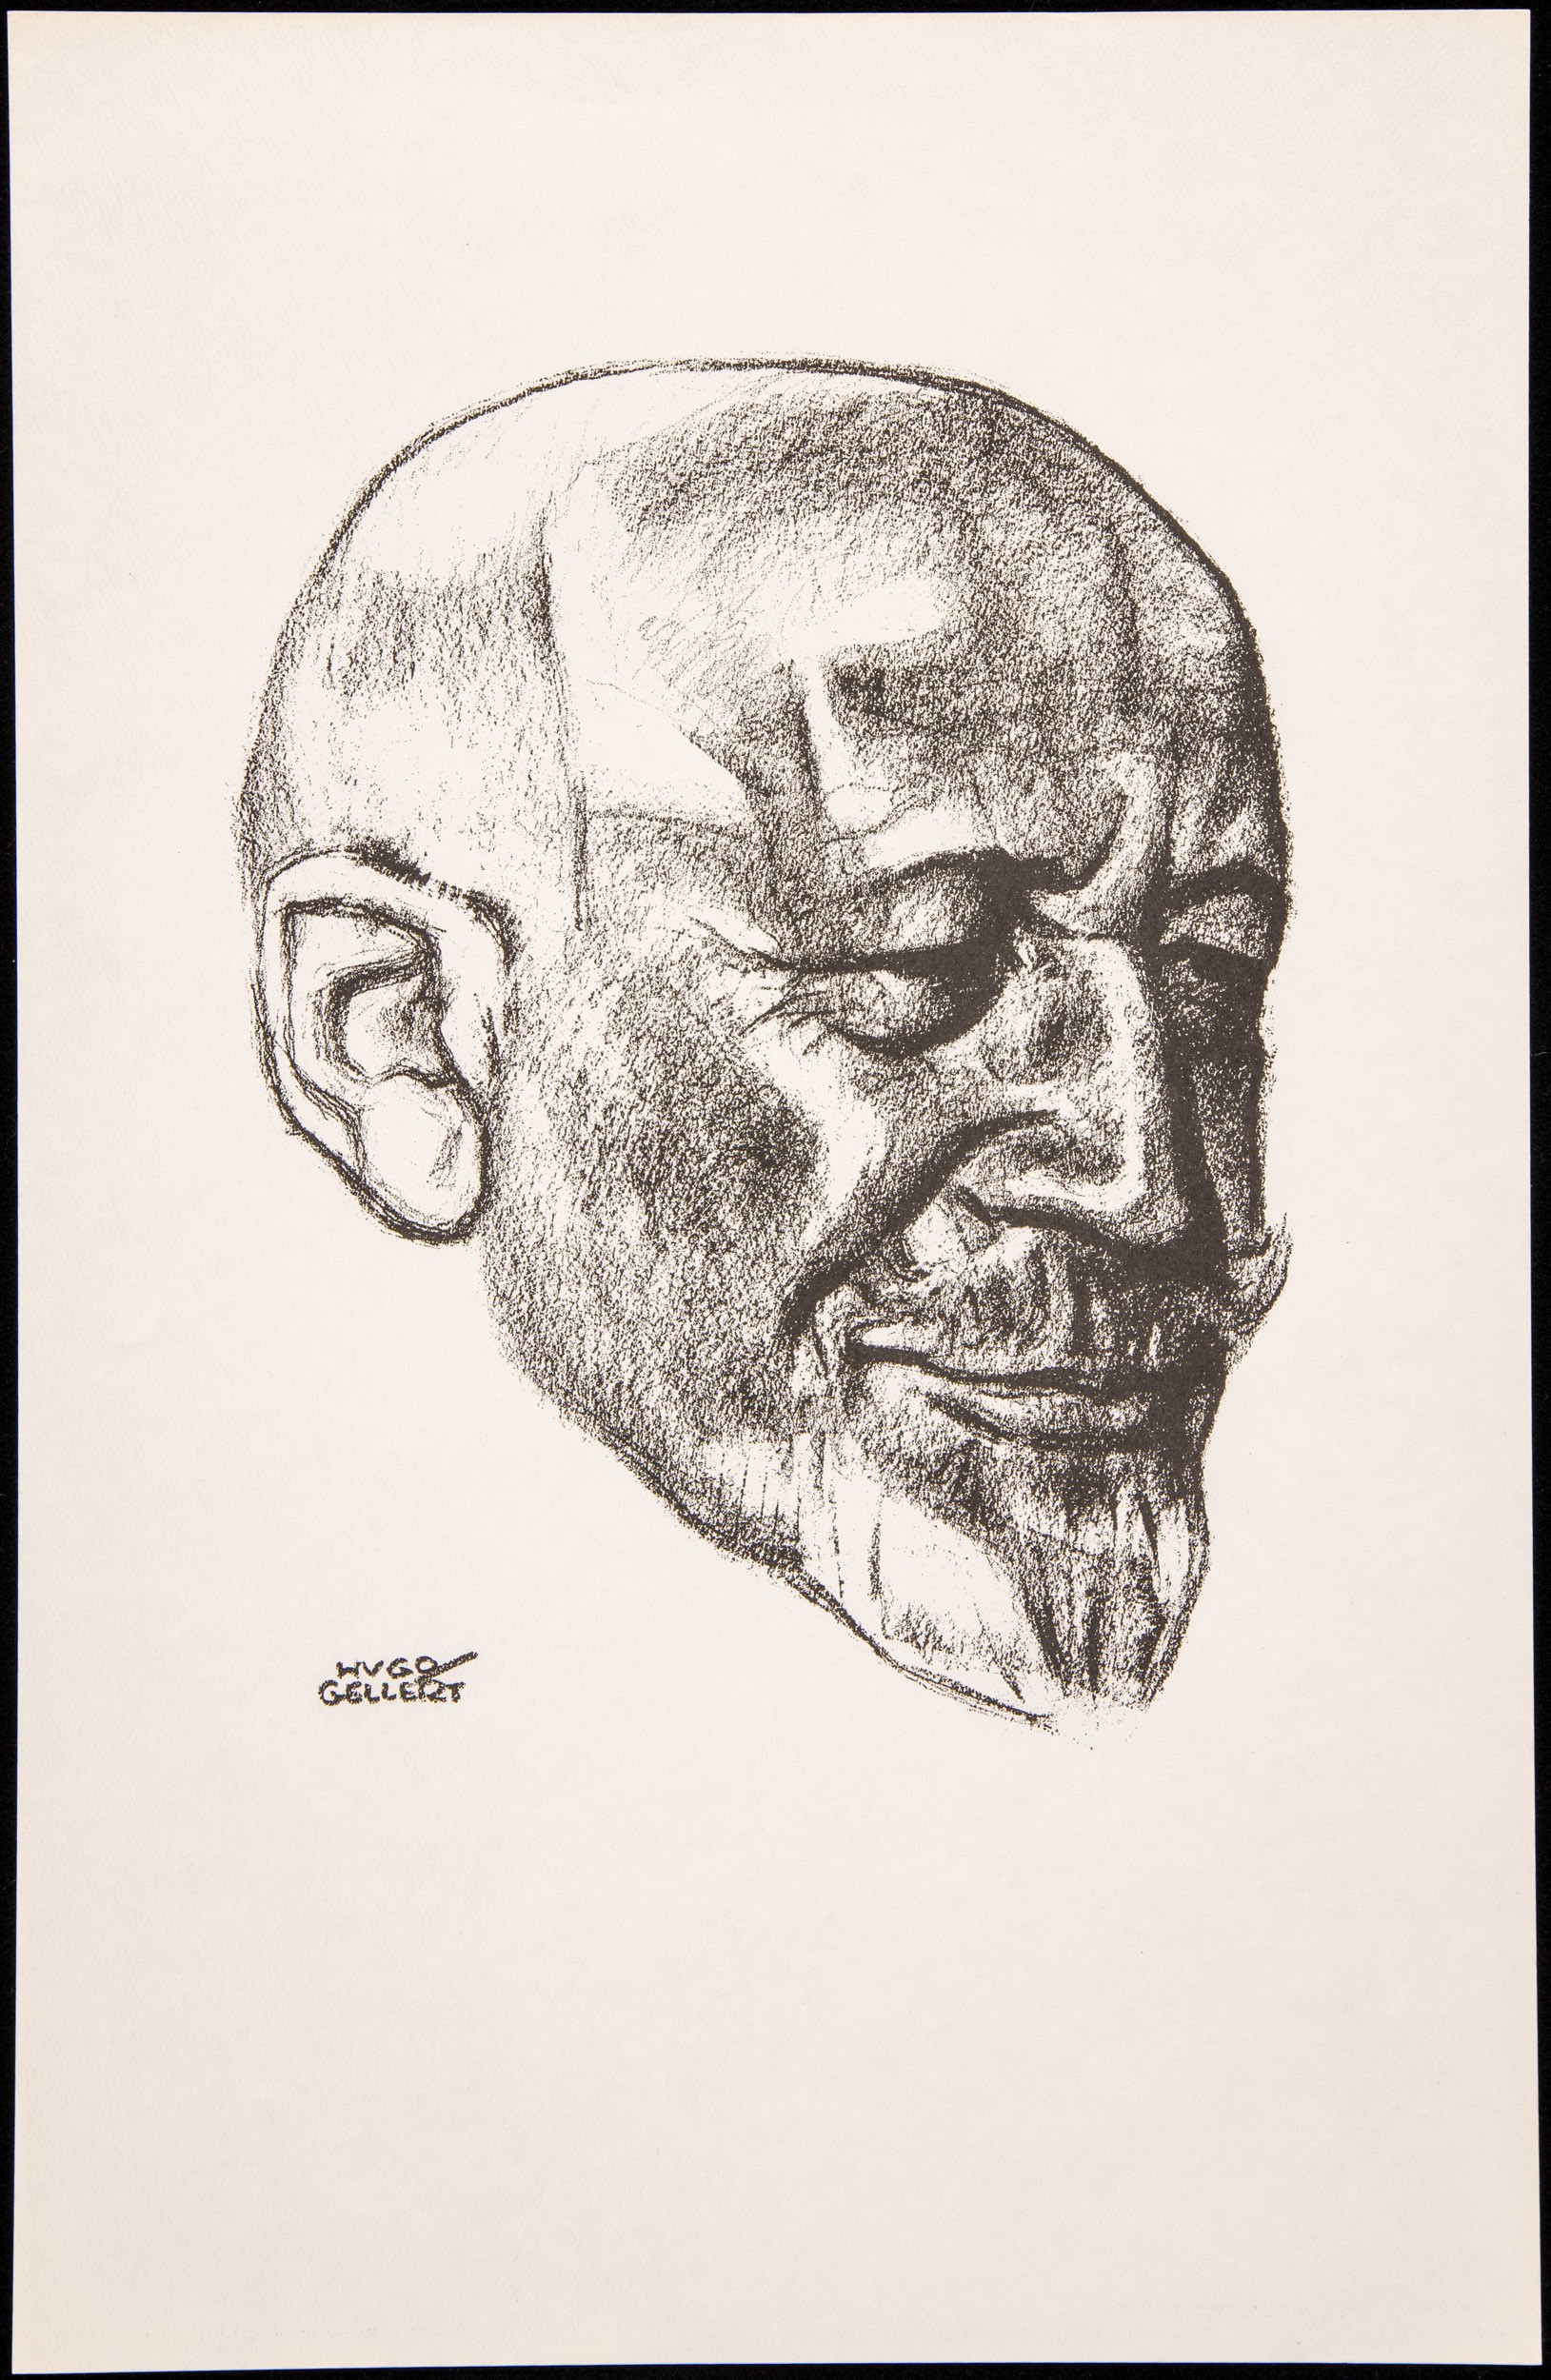 Gellért Hugó: Dr. William E. Burghardt Du Bois (Müller Miklós és Jan S. Keithly gyűjteménye - New York, USA CC BY-NC-SA)